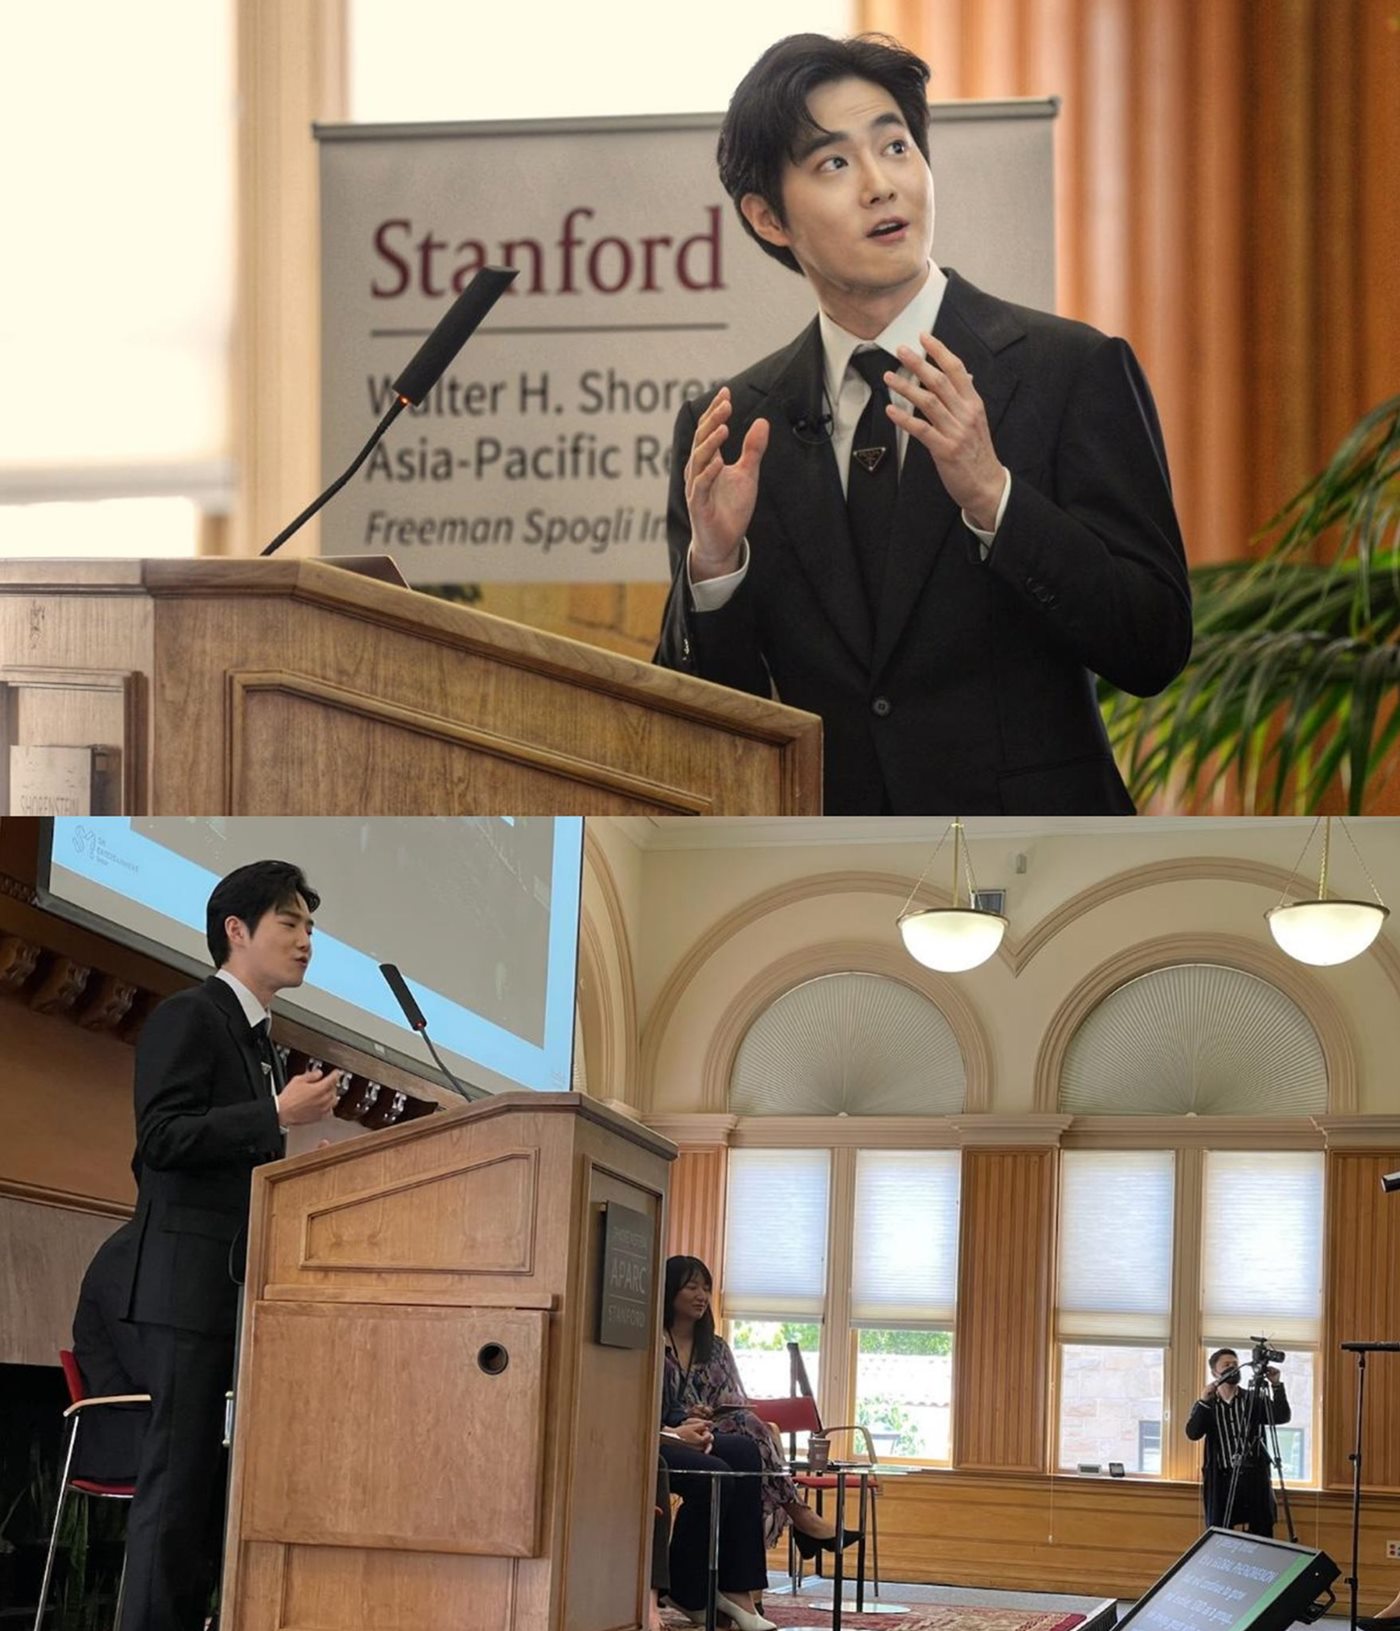 Potret Suho EXO di Stanford University